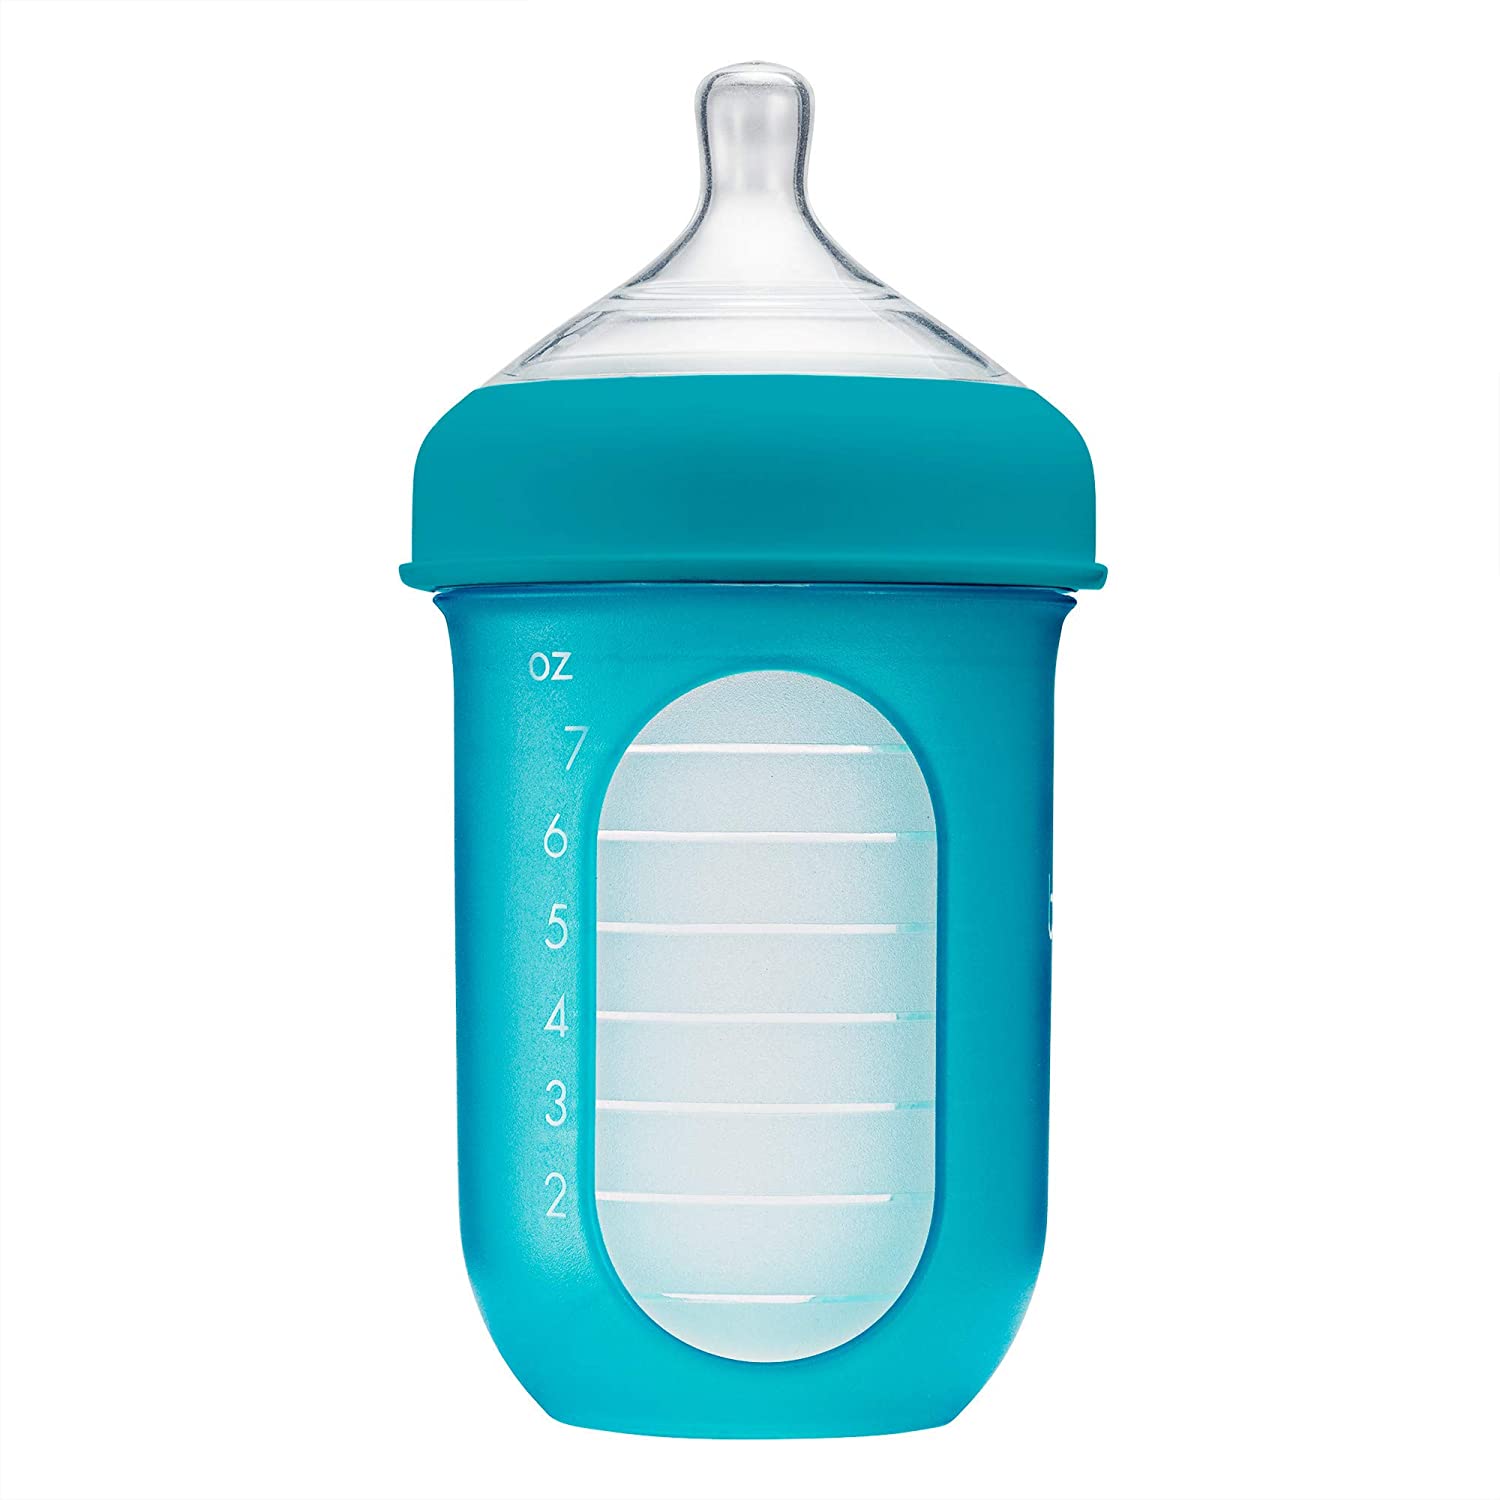 Boon Nursh Silicone Pouch Bottle 8oz (3-pack) - Blue